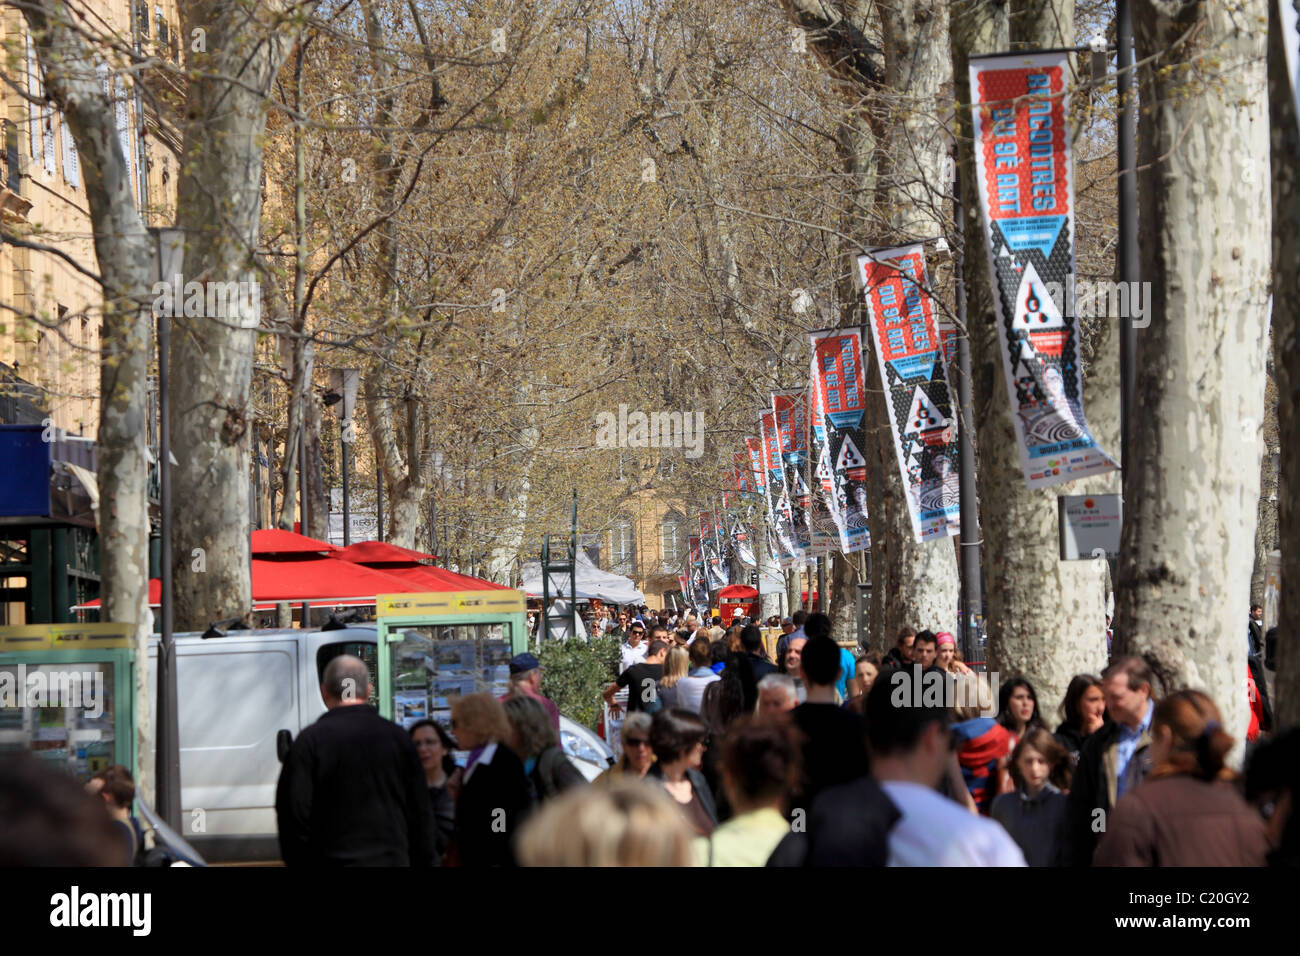 La vivace scena di strada in Aix en Provence Foto Stock